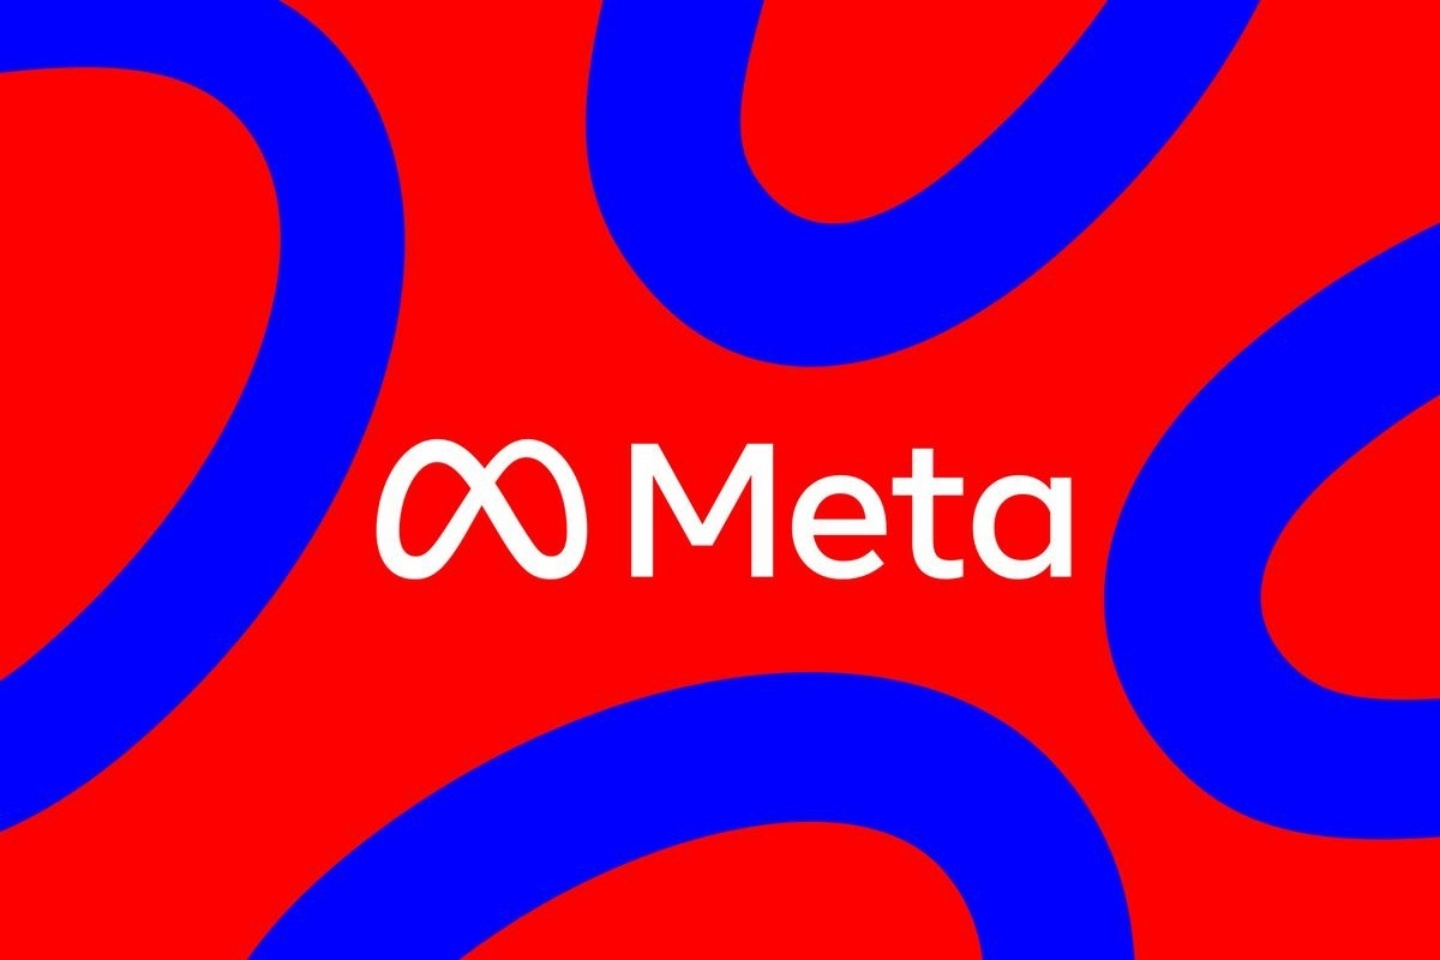 Meta 也正式上了 AI 戰場？祖克柏宣布正積極開發首款 AI 晶片『 MTIA 』，但要 2025 年才能問世